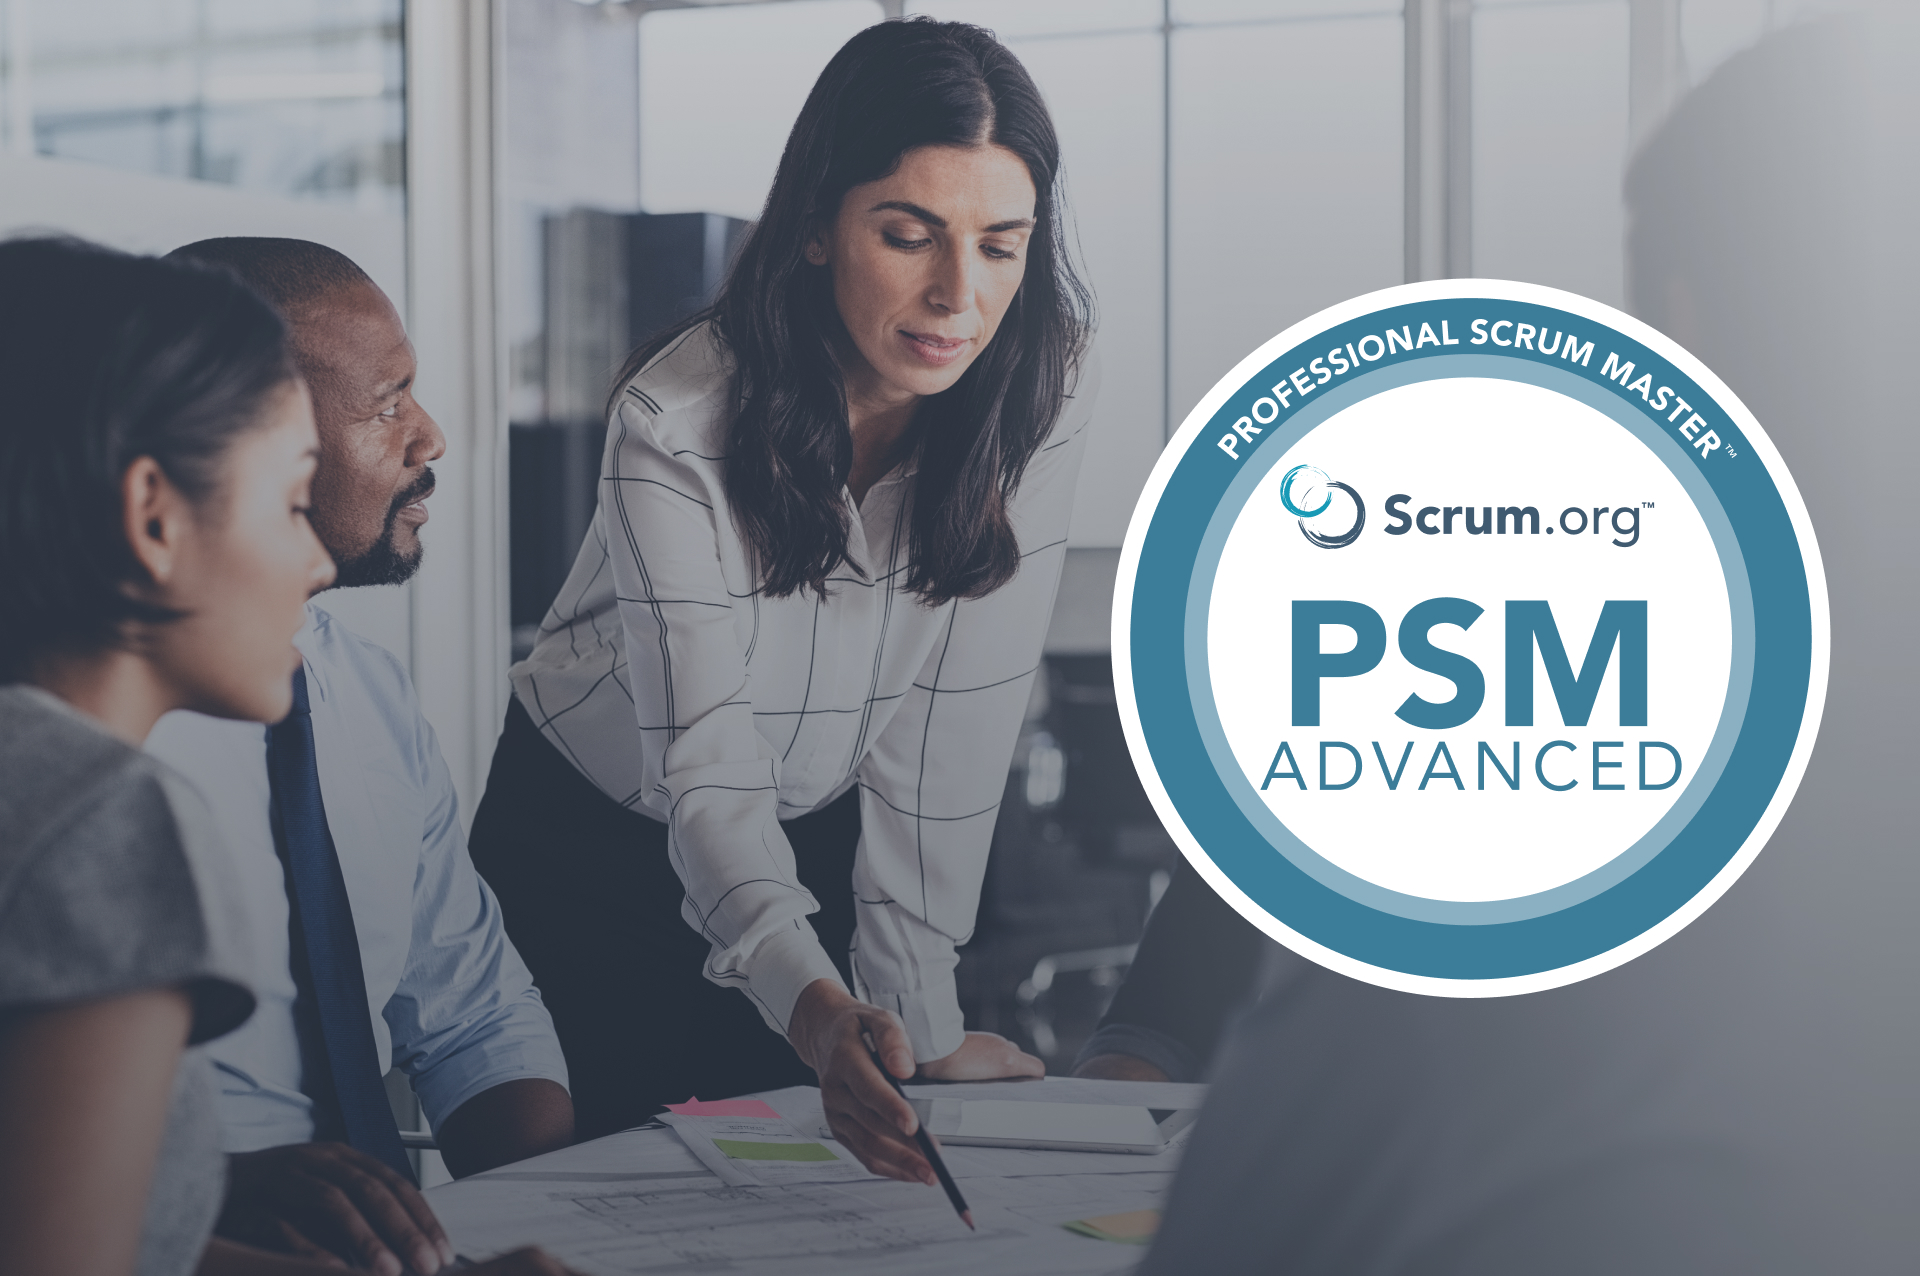 PSM-A - Professional Scrum Master - Advanced™